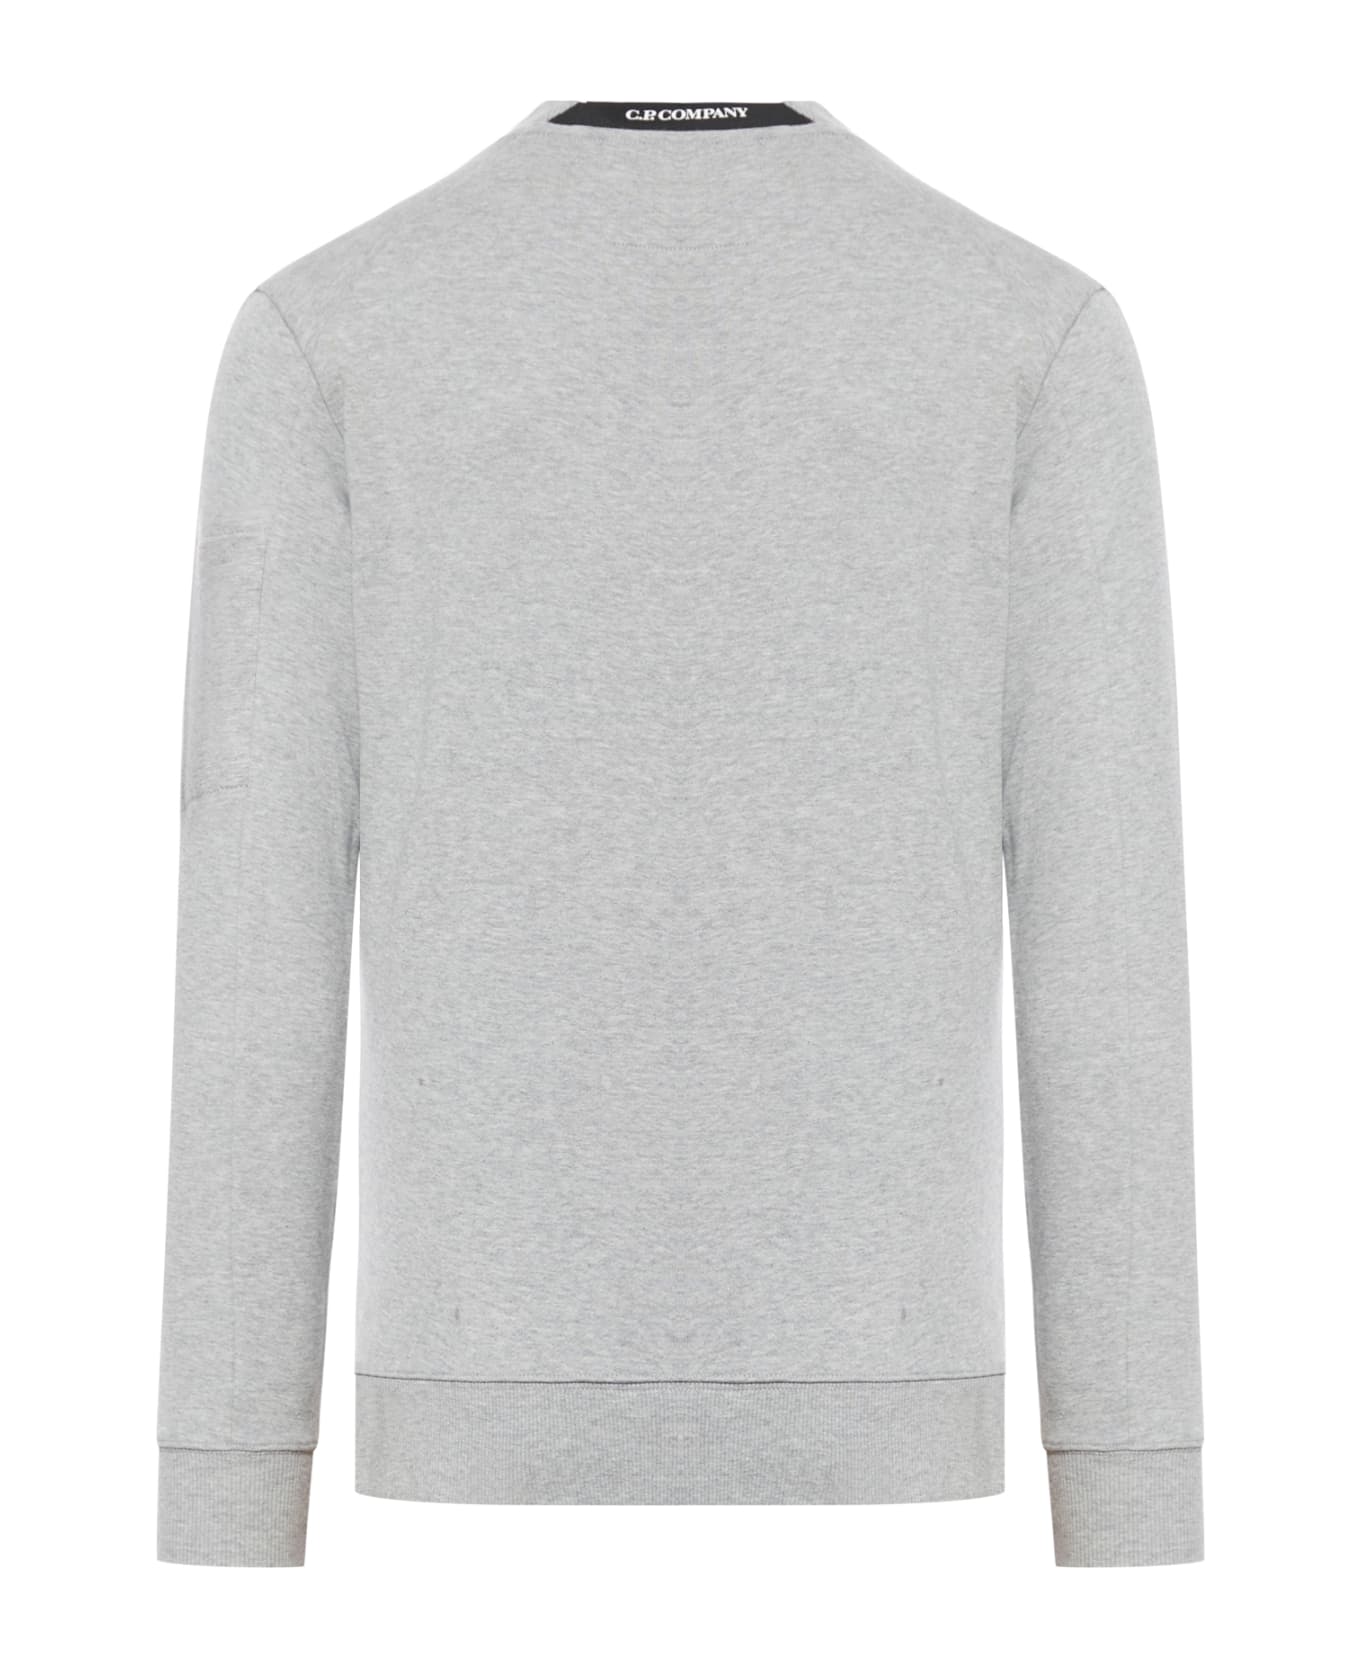 C.P. Company 'diagonal Raised Fleece' Grey Cotton Sweatshirt - Grey Melange フリース